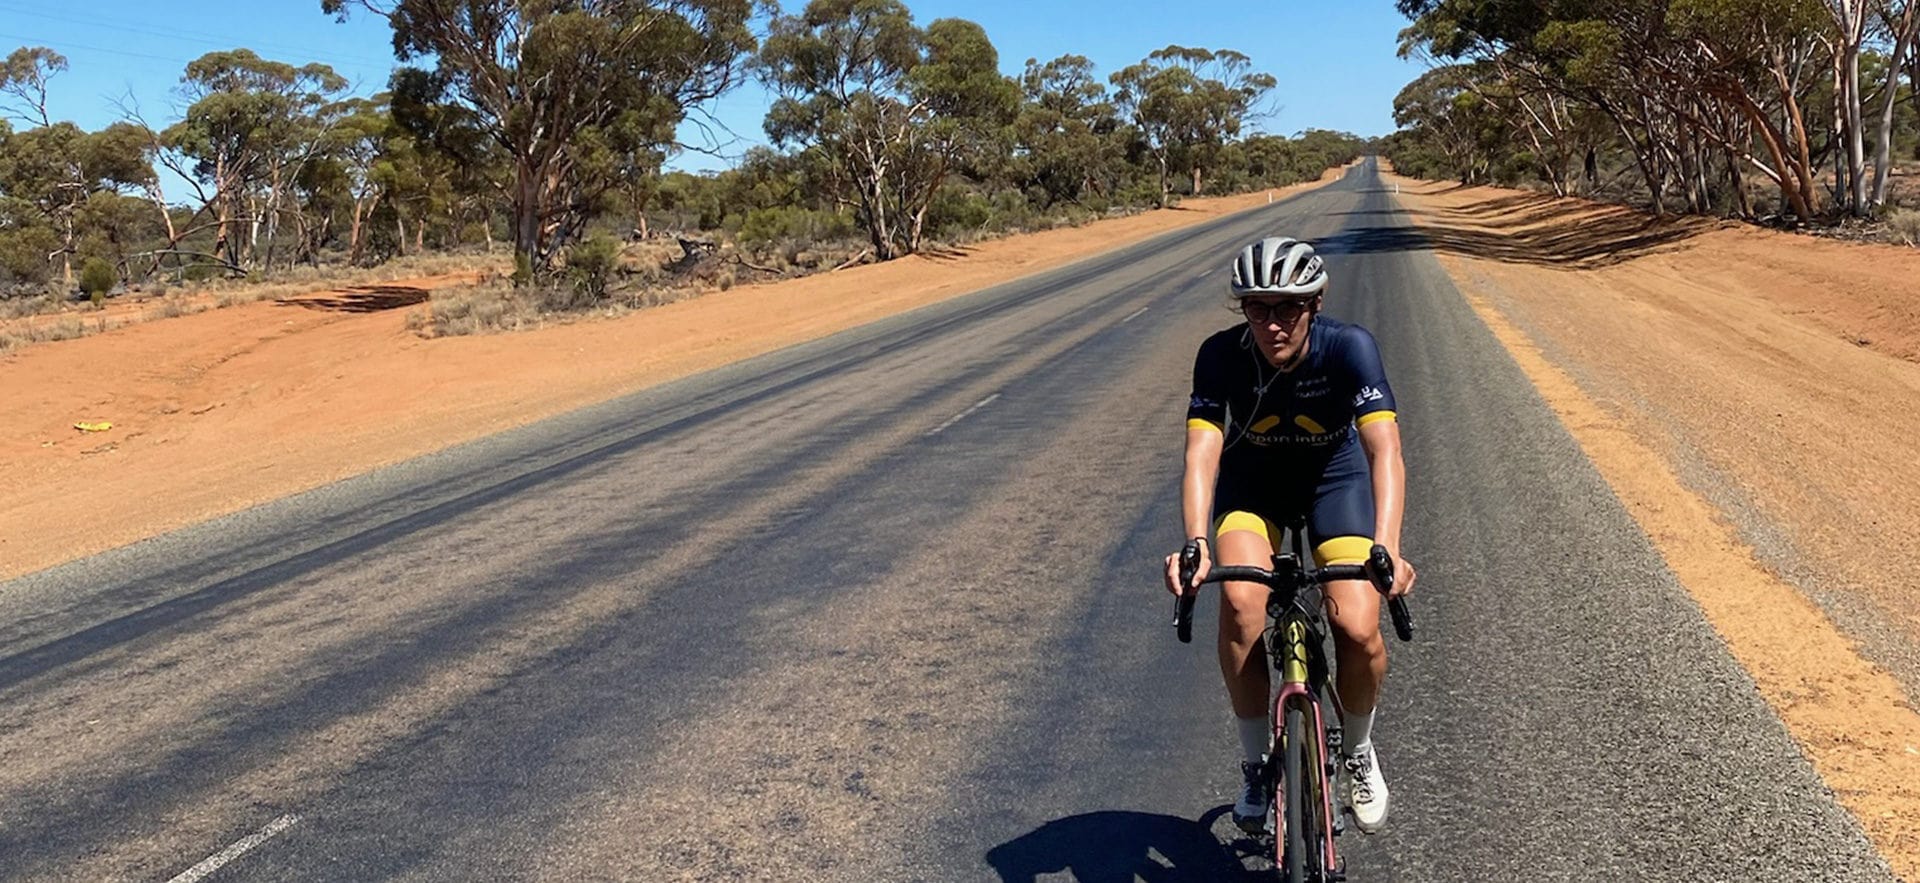 The long road for Caroline Soubayroux and David Ferguson in Australia: Perth to Brisbane.